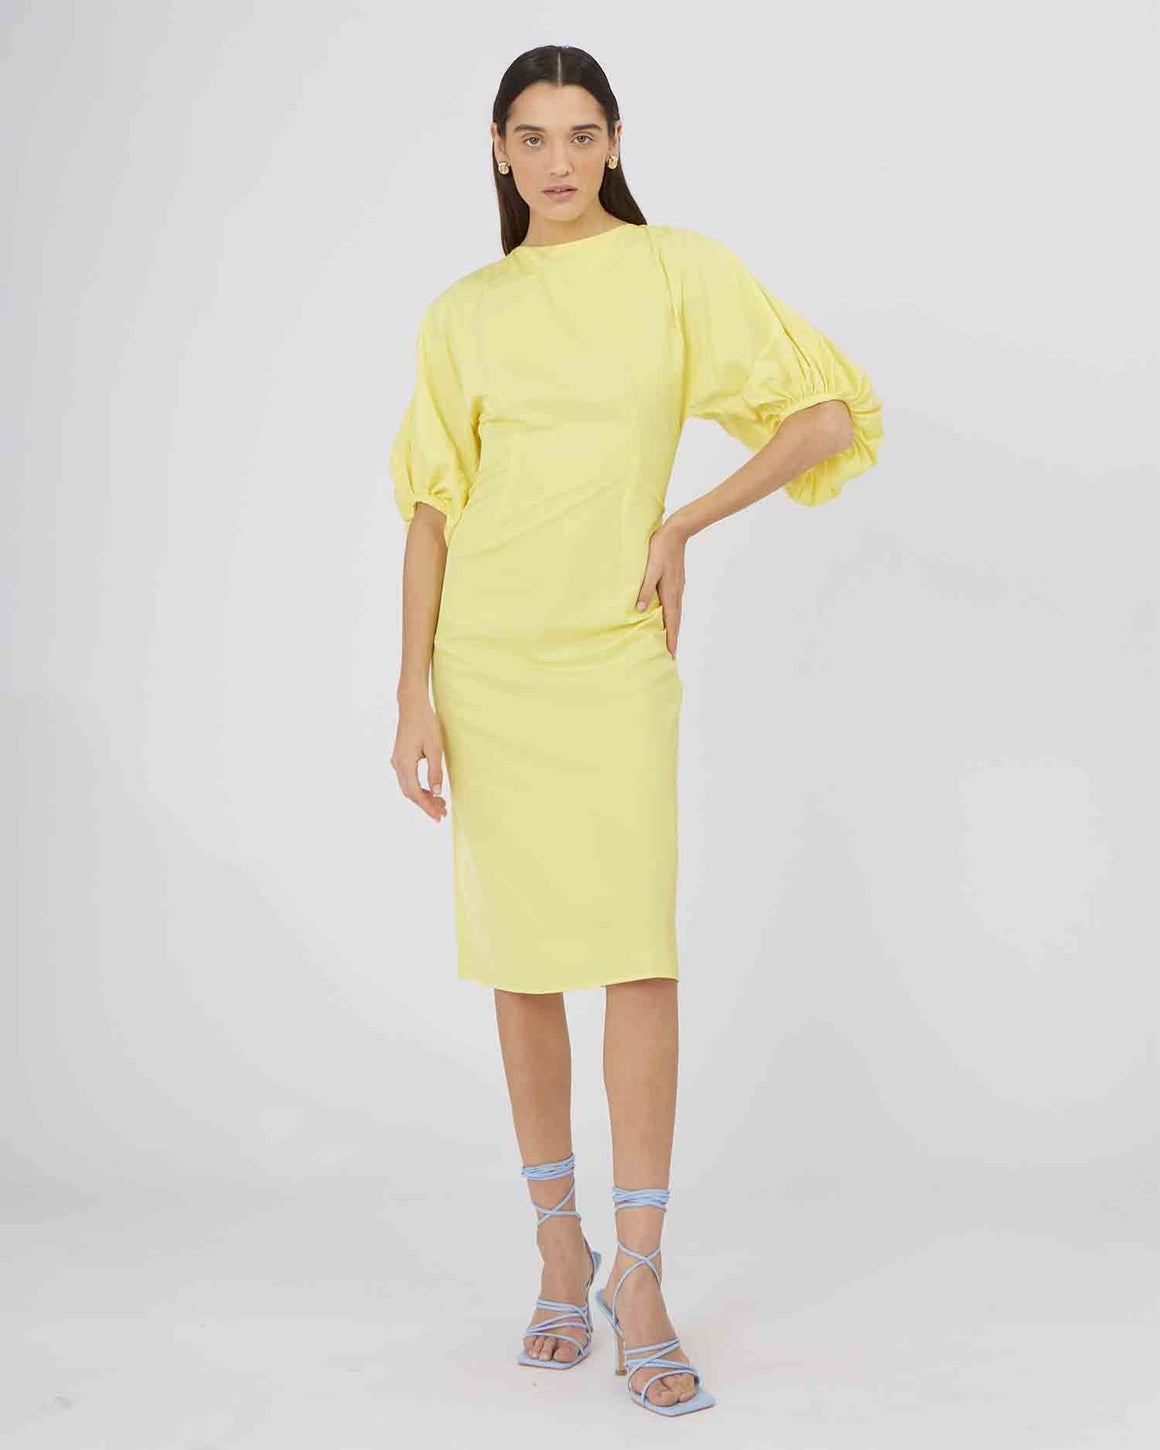 Silvan Heach Yellow Safety Dress